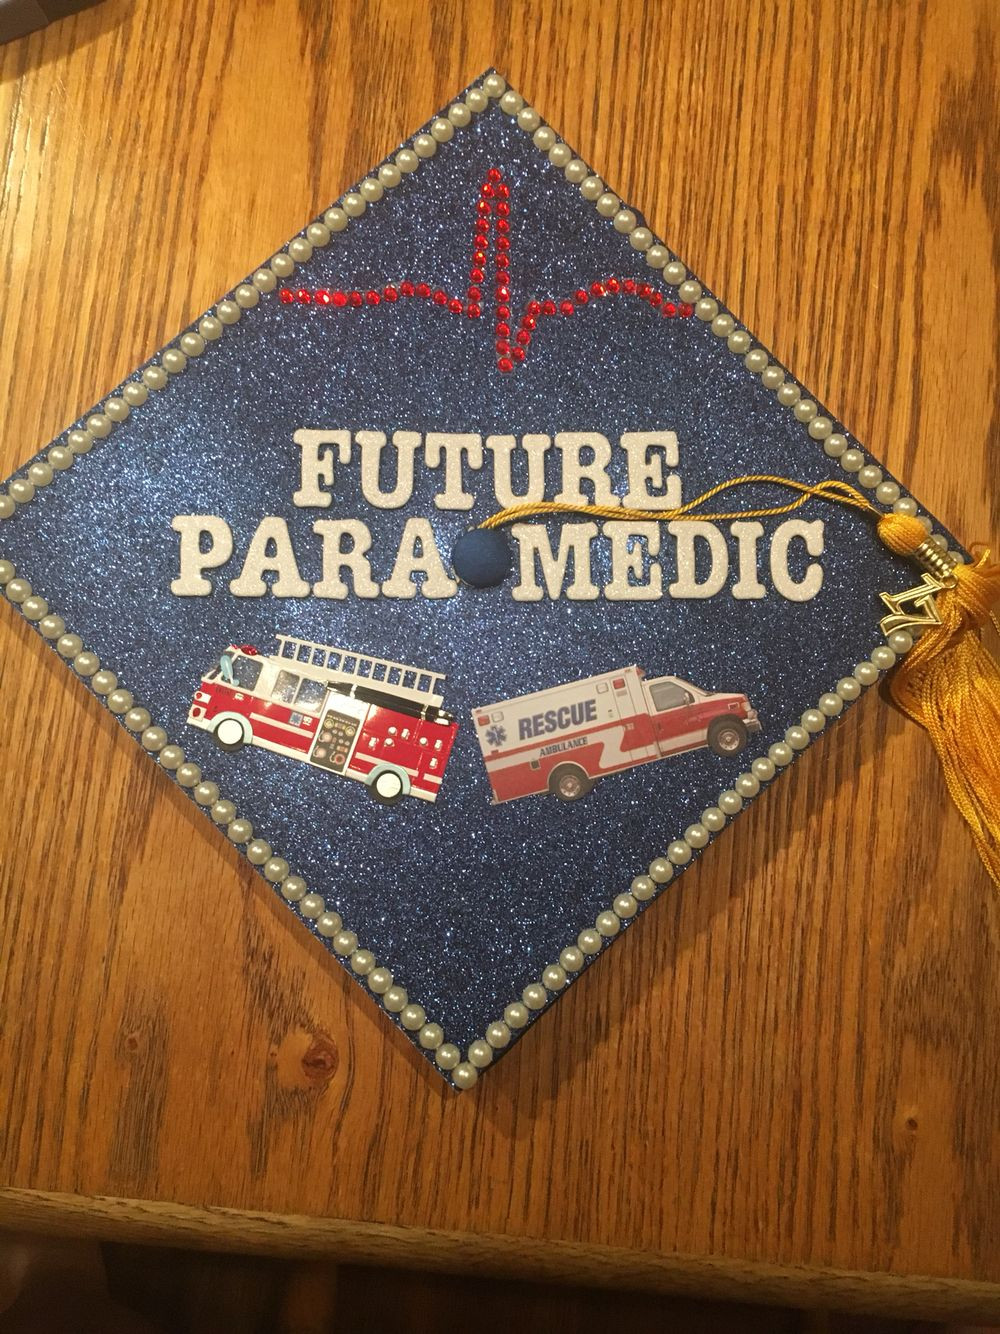 Bachelor Degree Graduation Gift Ideas
 Bachelor s Degree Next stop Paramedic School